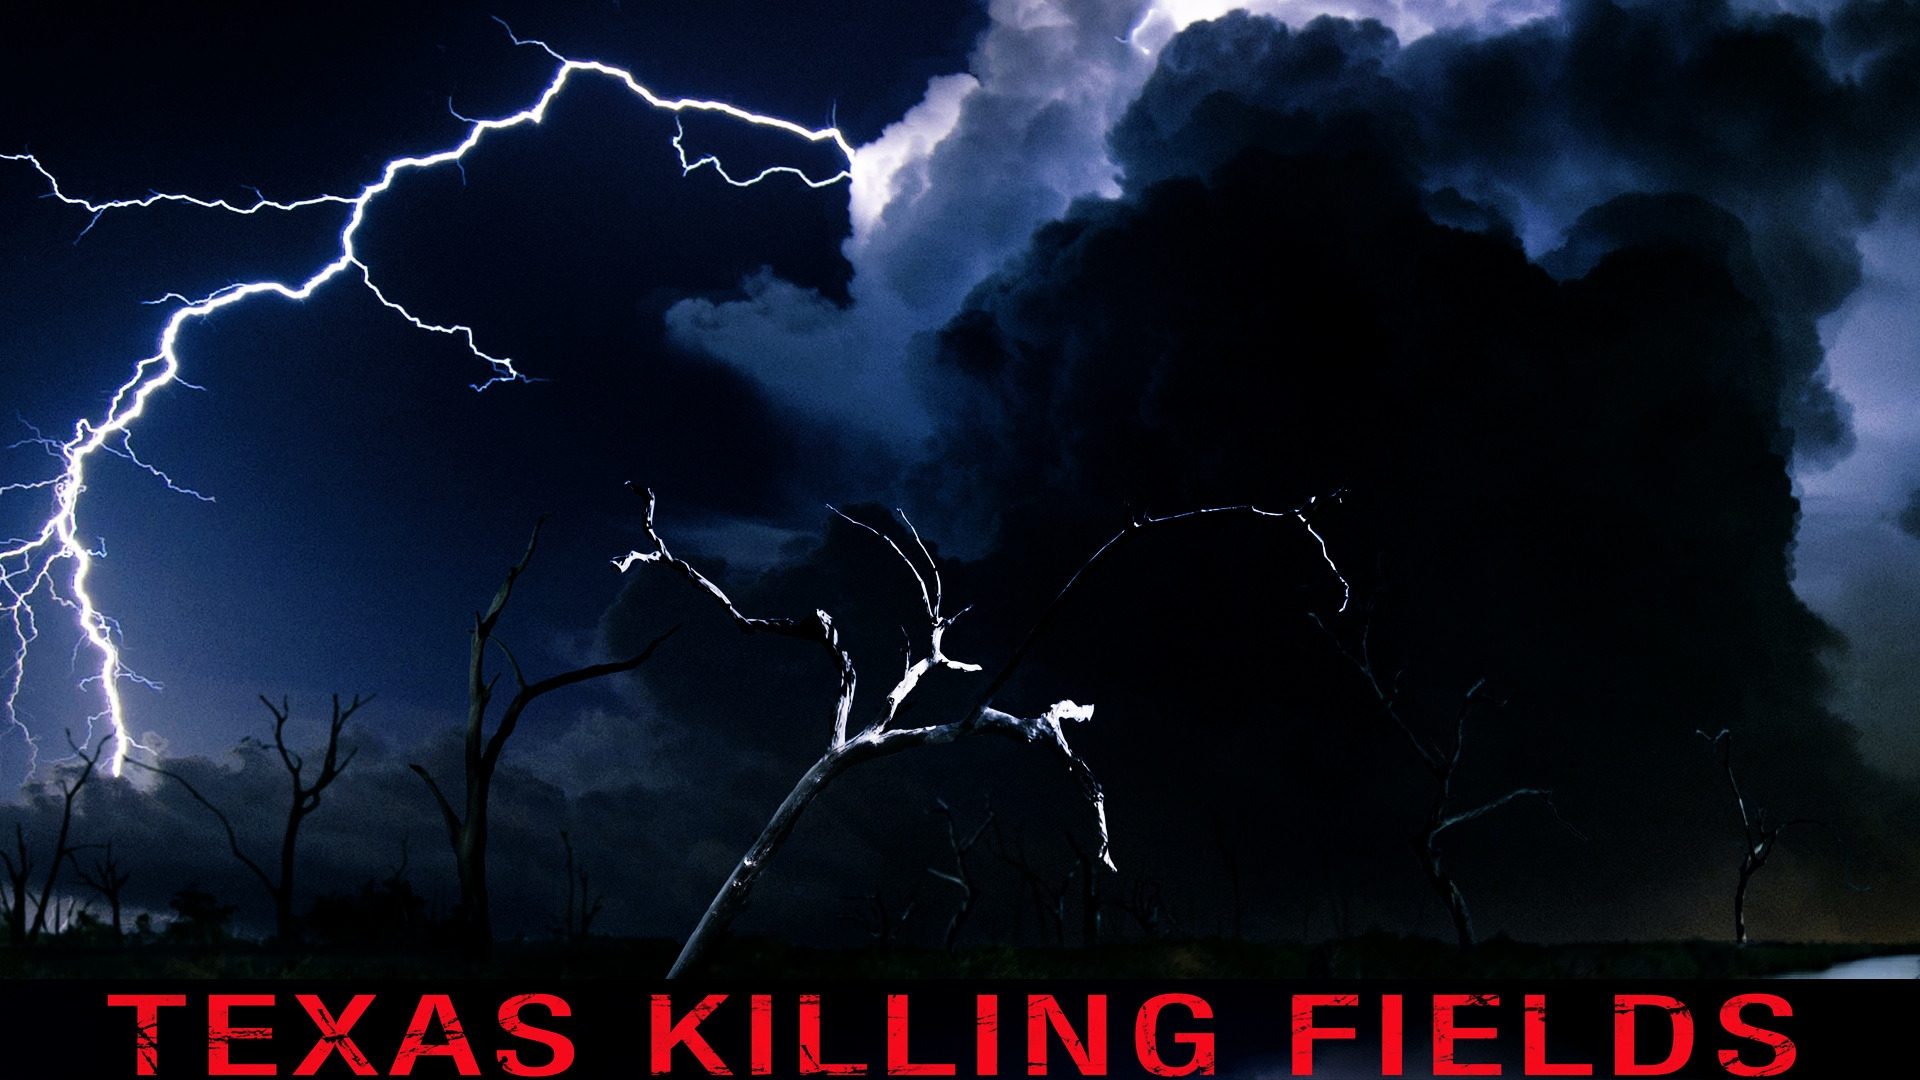 Texas Killing Fields Poster for 1920 x 1080 HDTV 1080p resolution